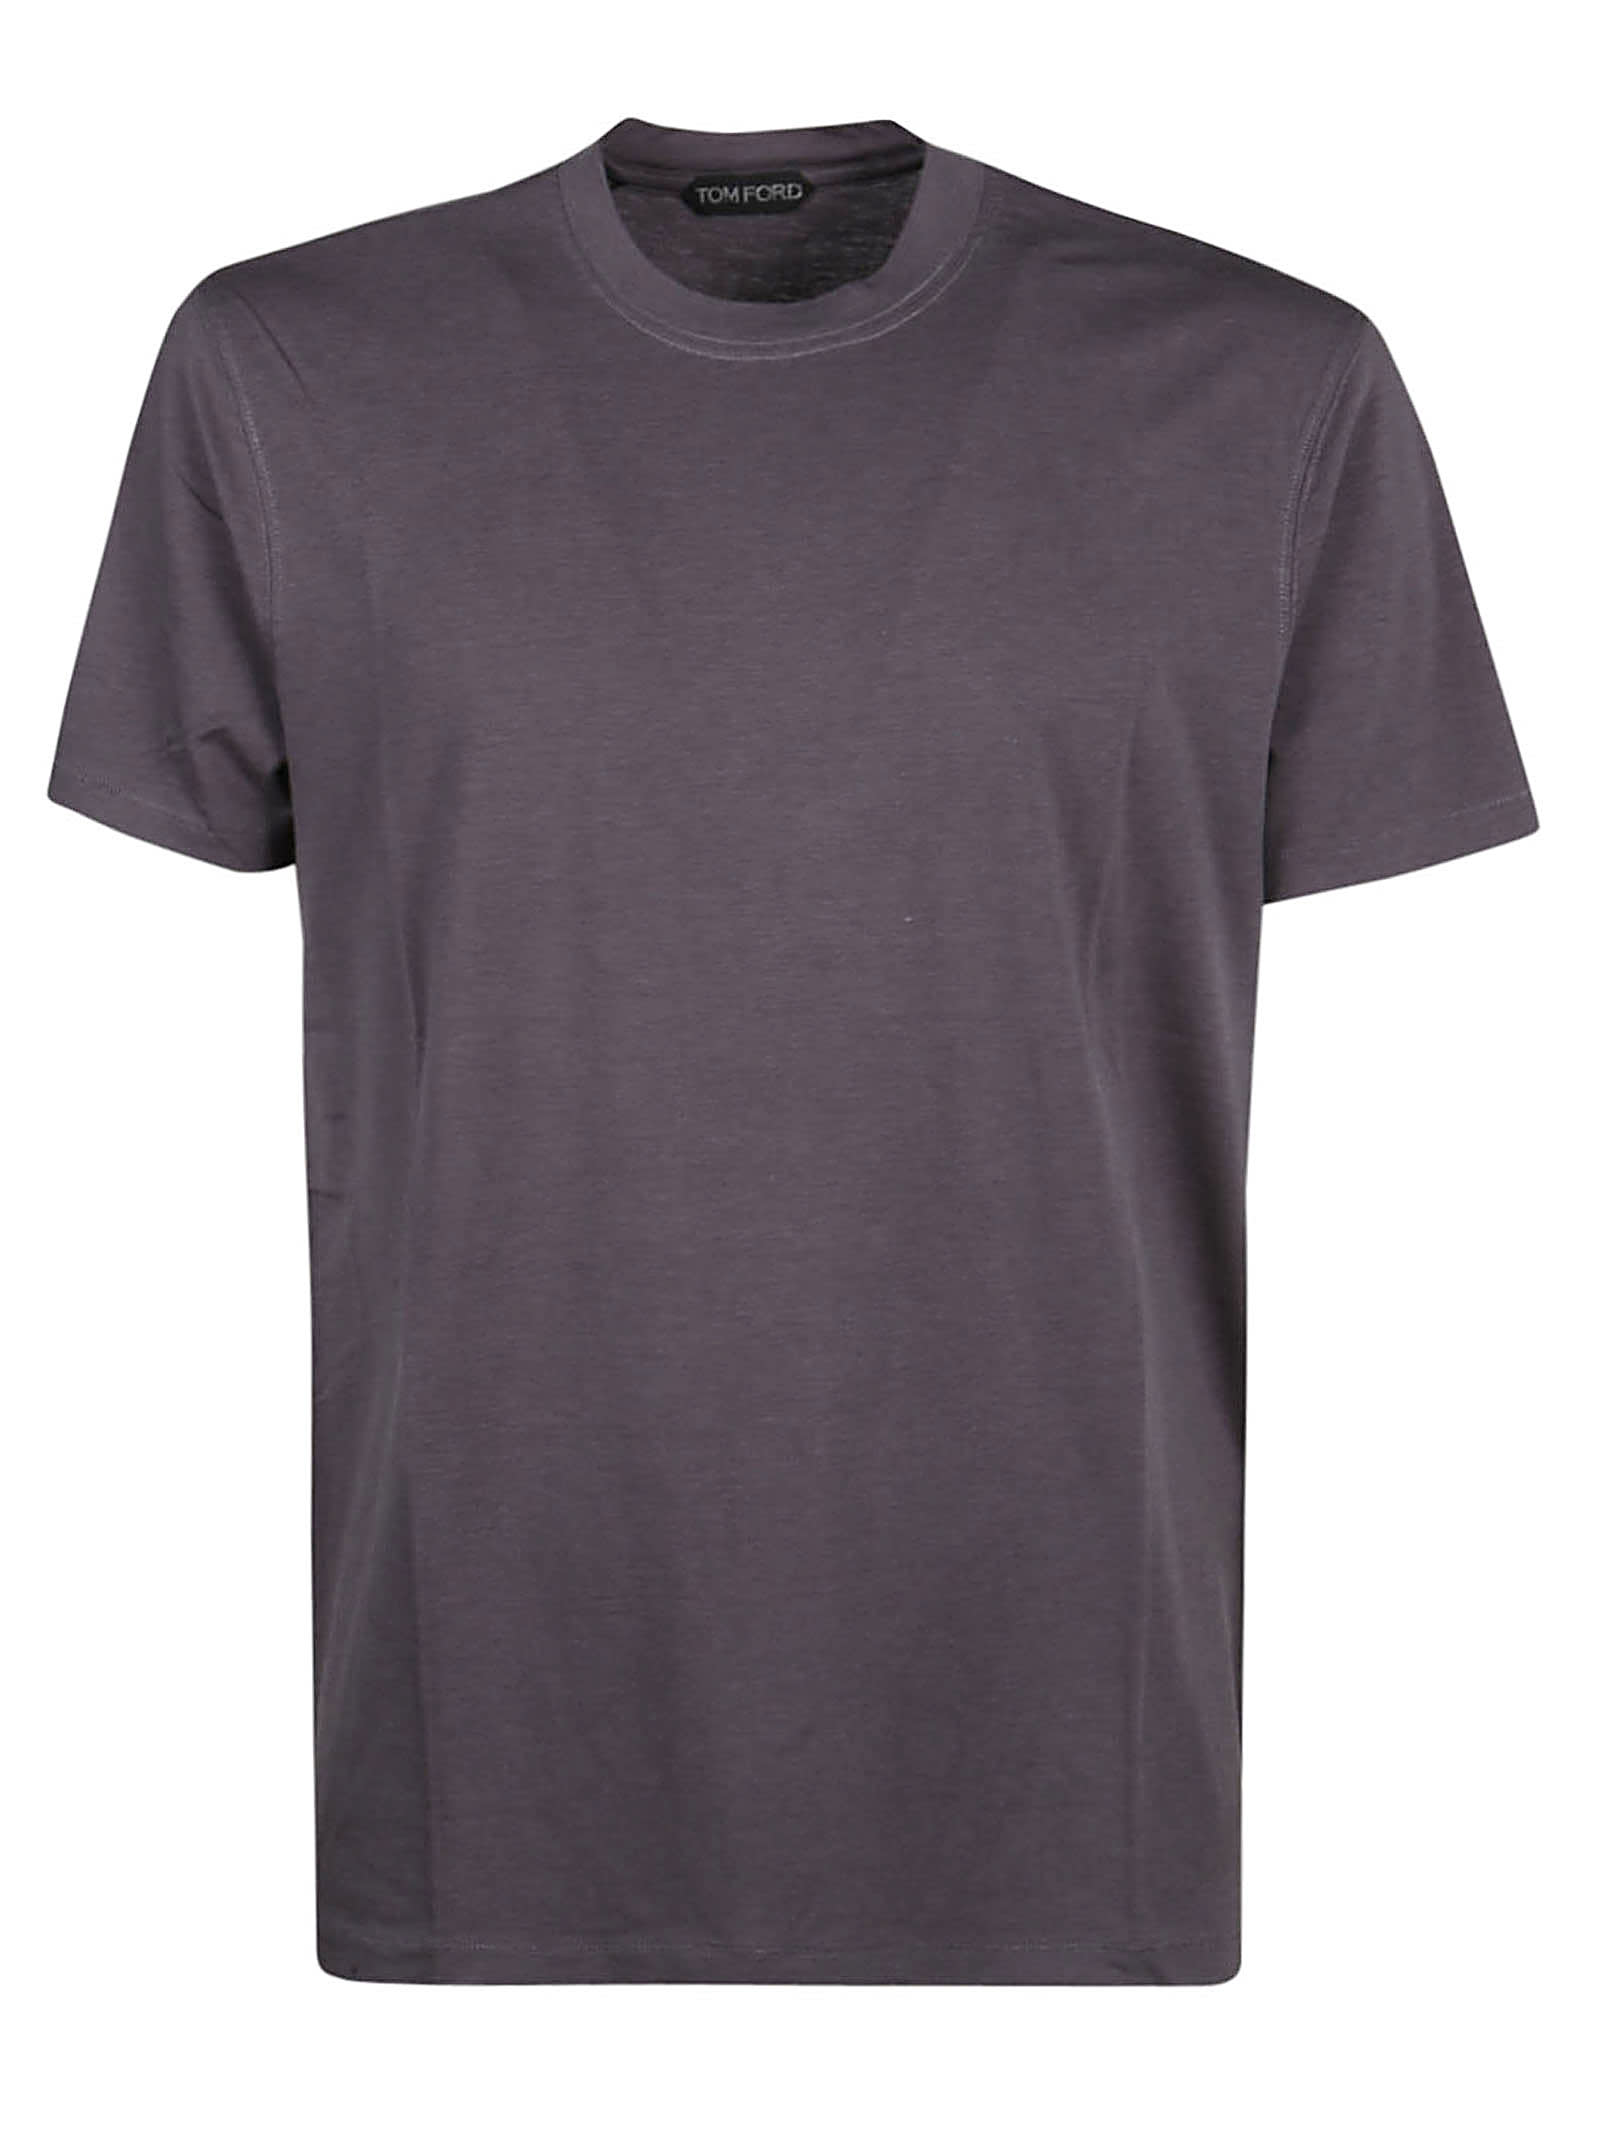 Tom Ford Garment Dyed T-shirt